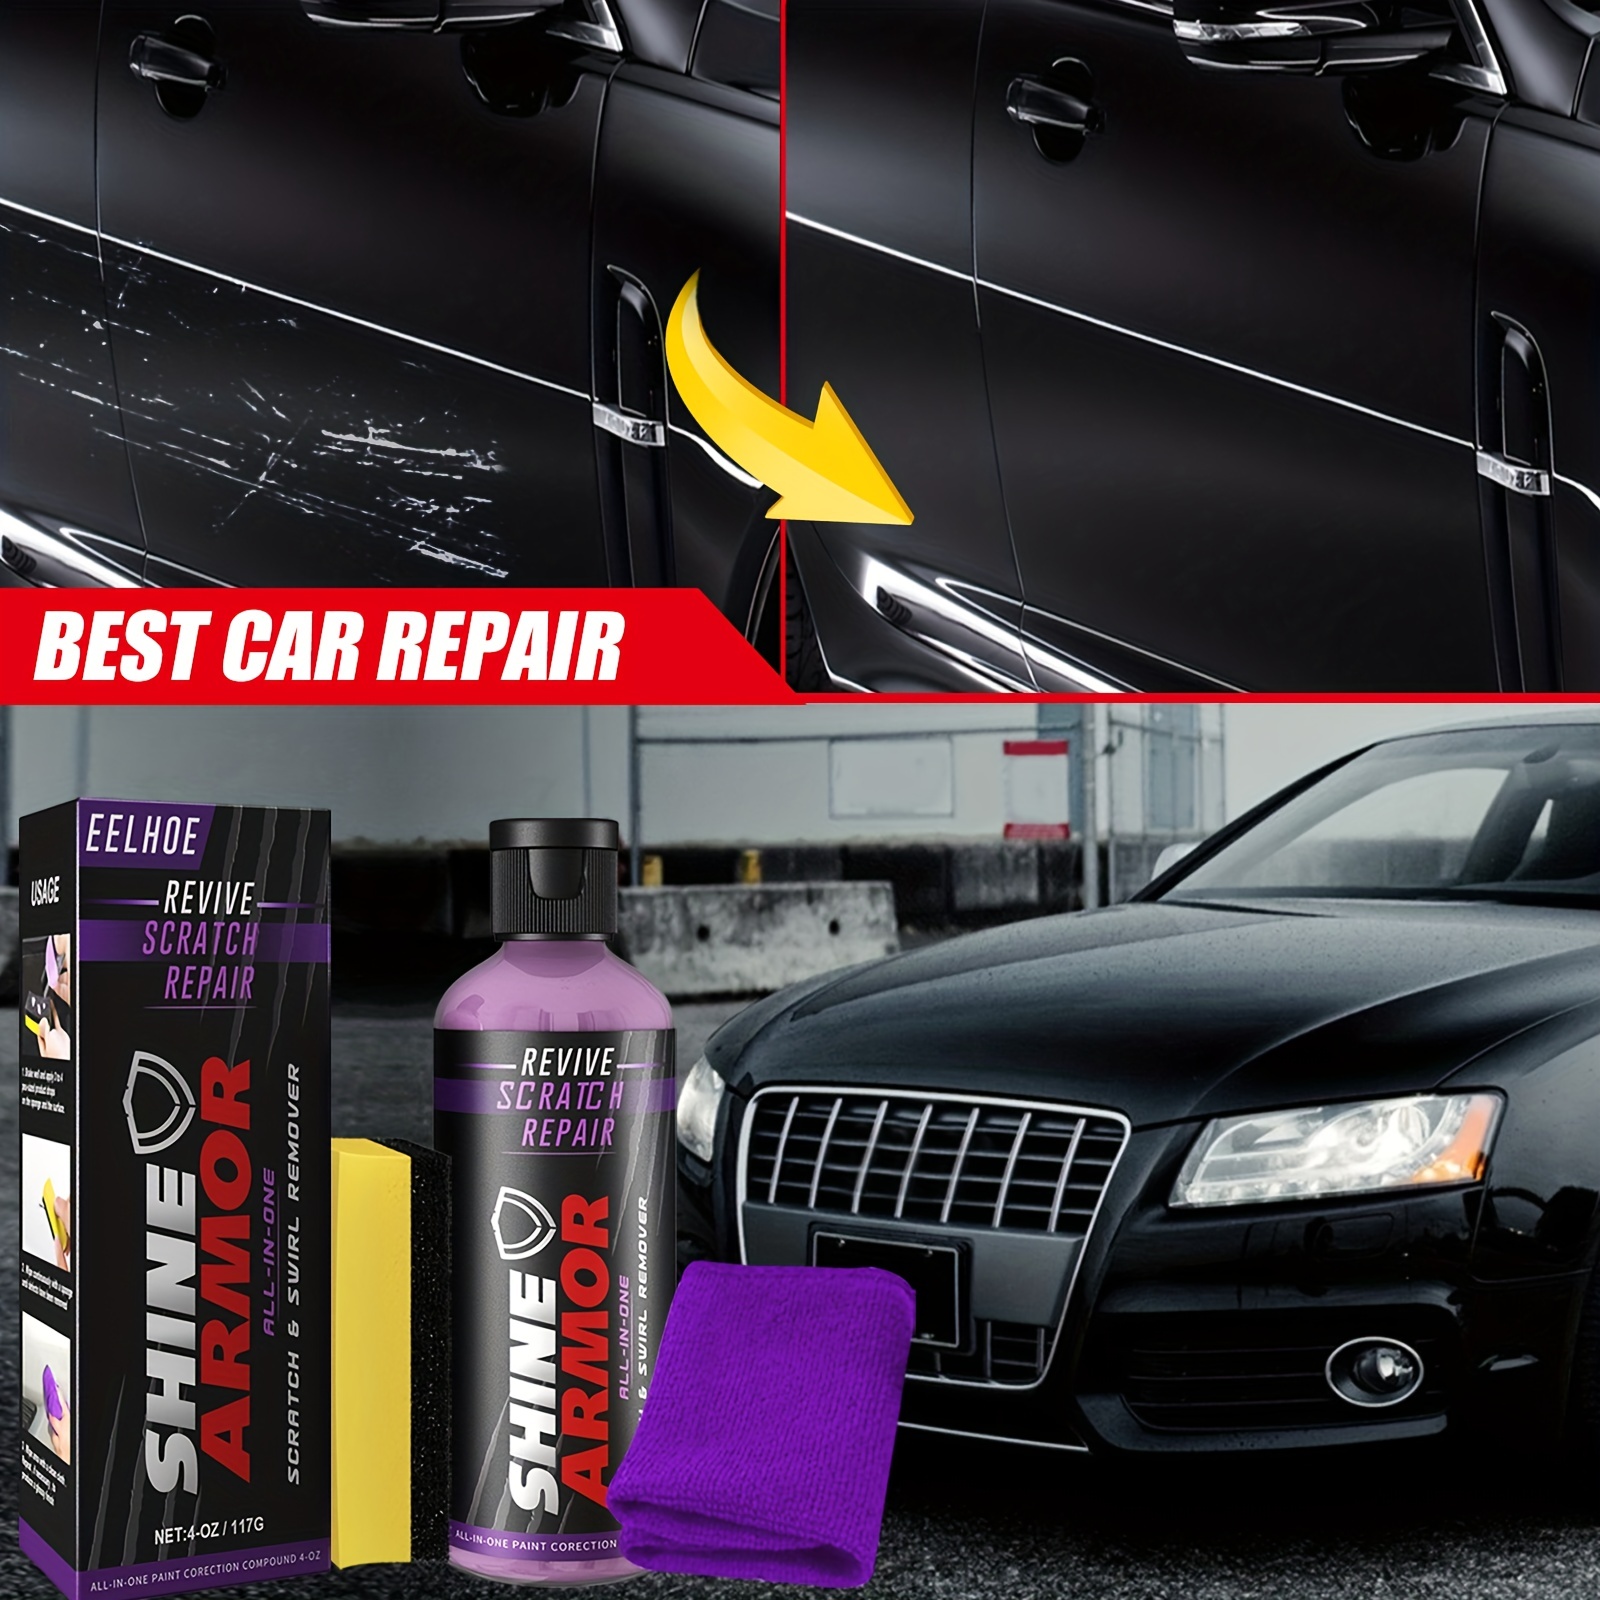 Car Scratch Repair Agent-Car Paint Scratch Repair Fluid